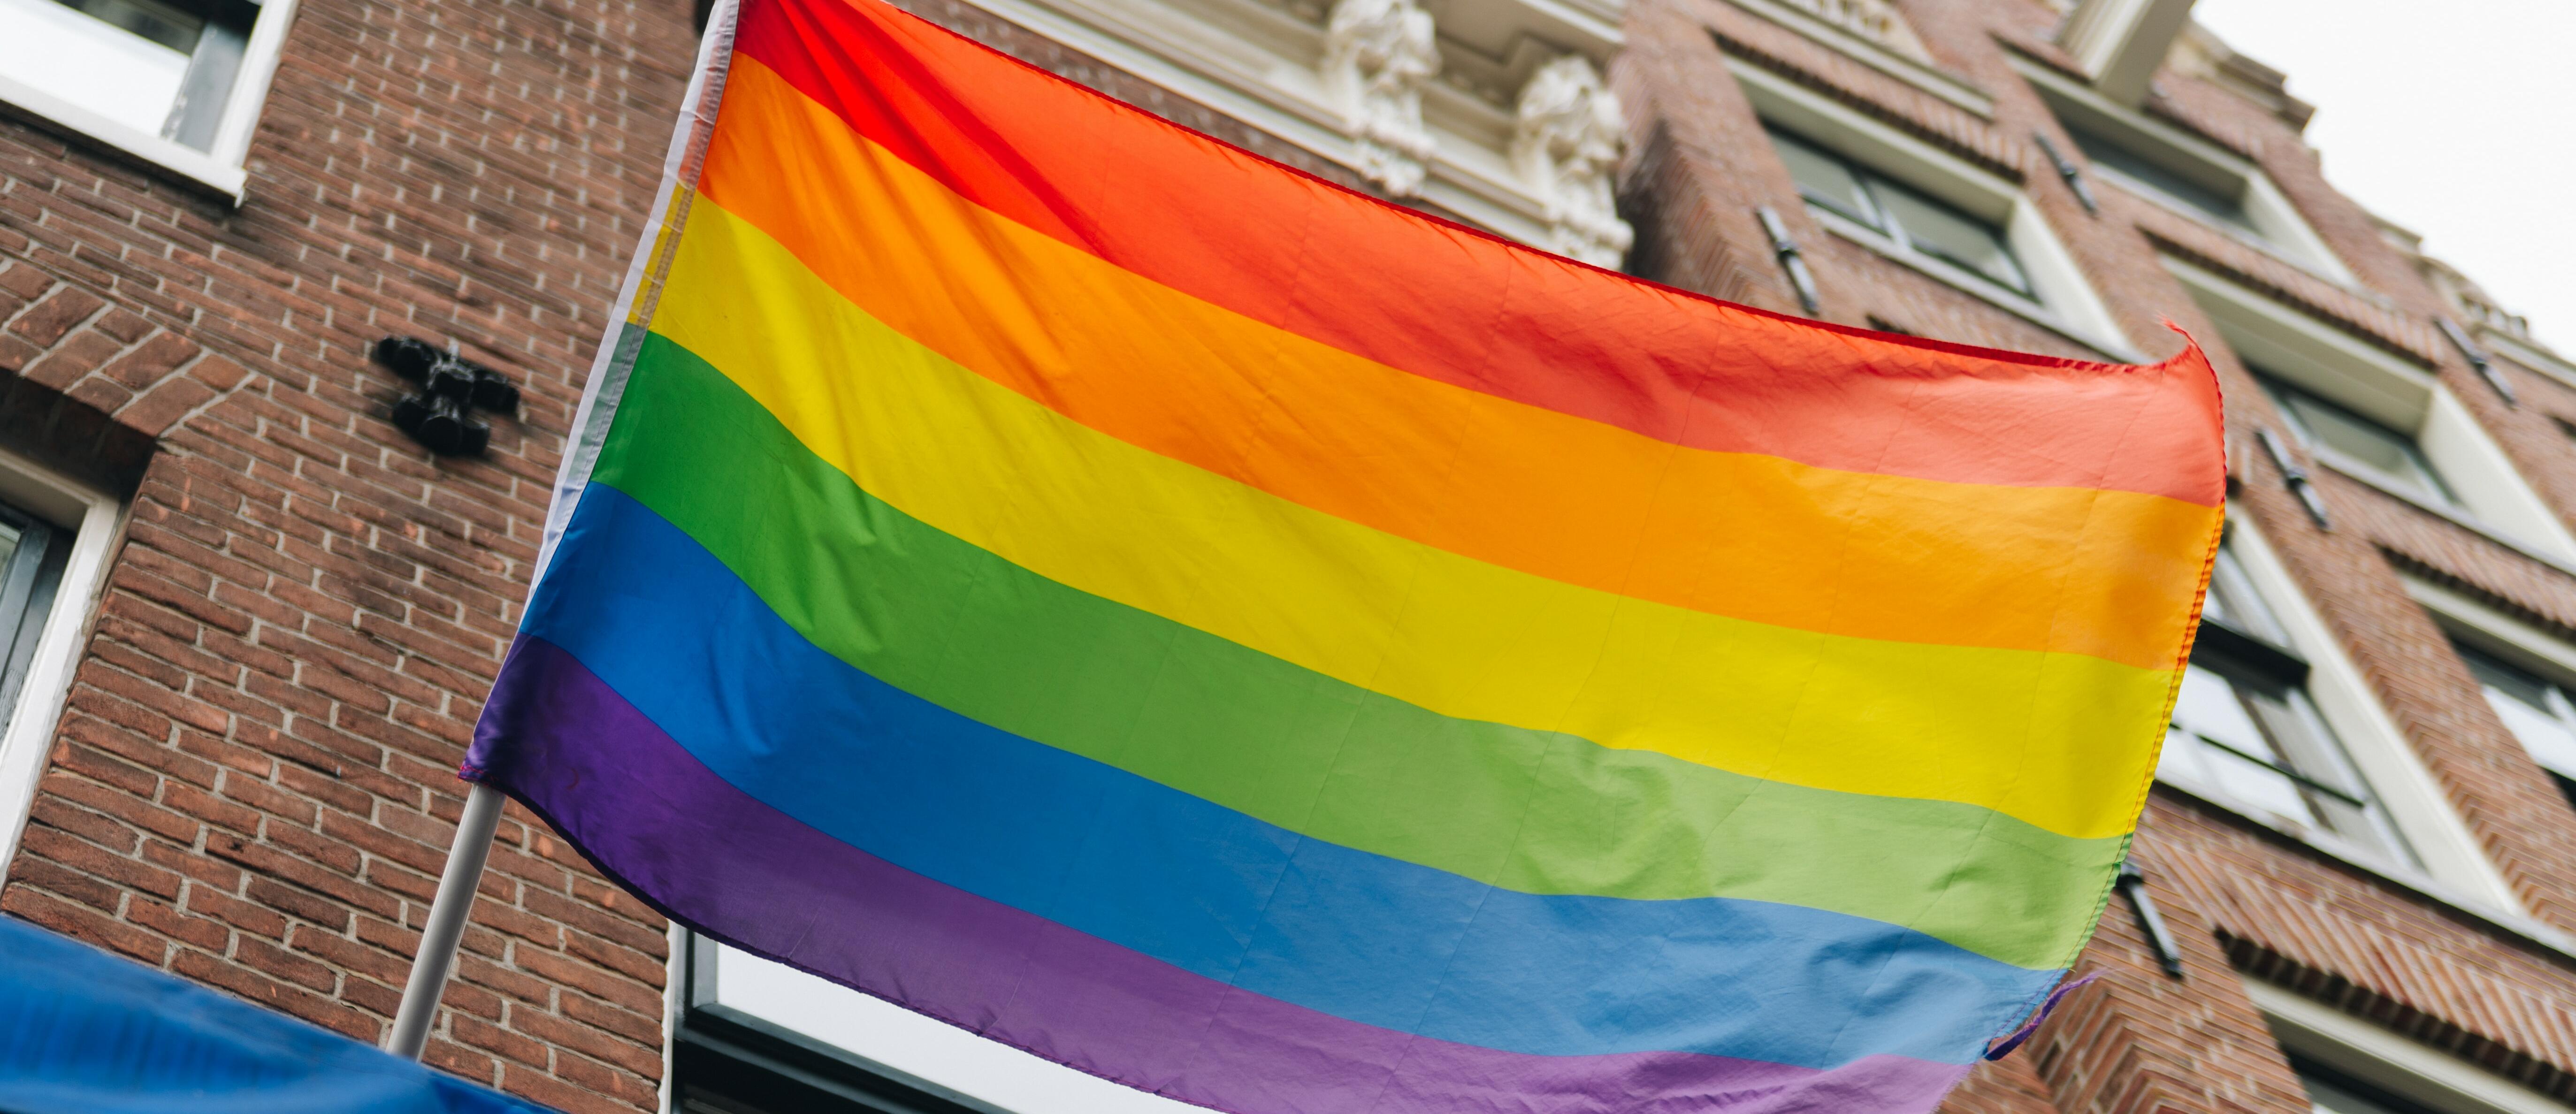 Bandera LGBTI+